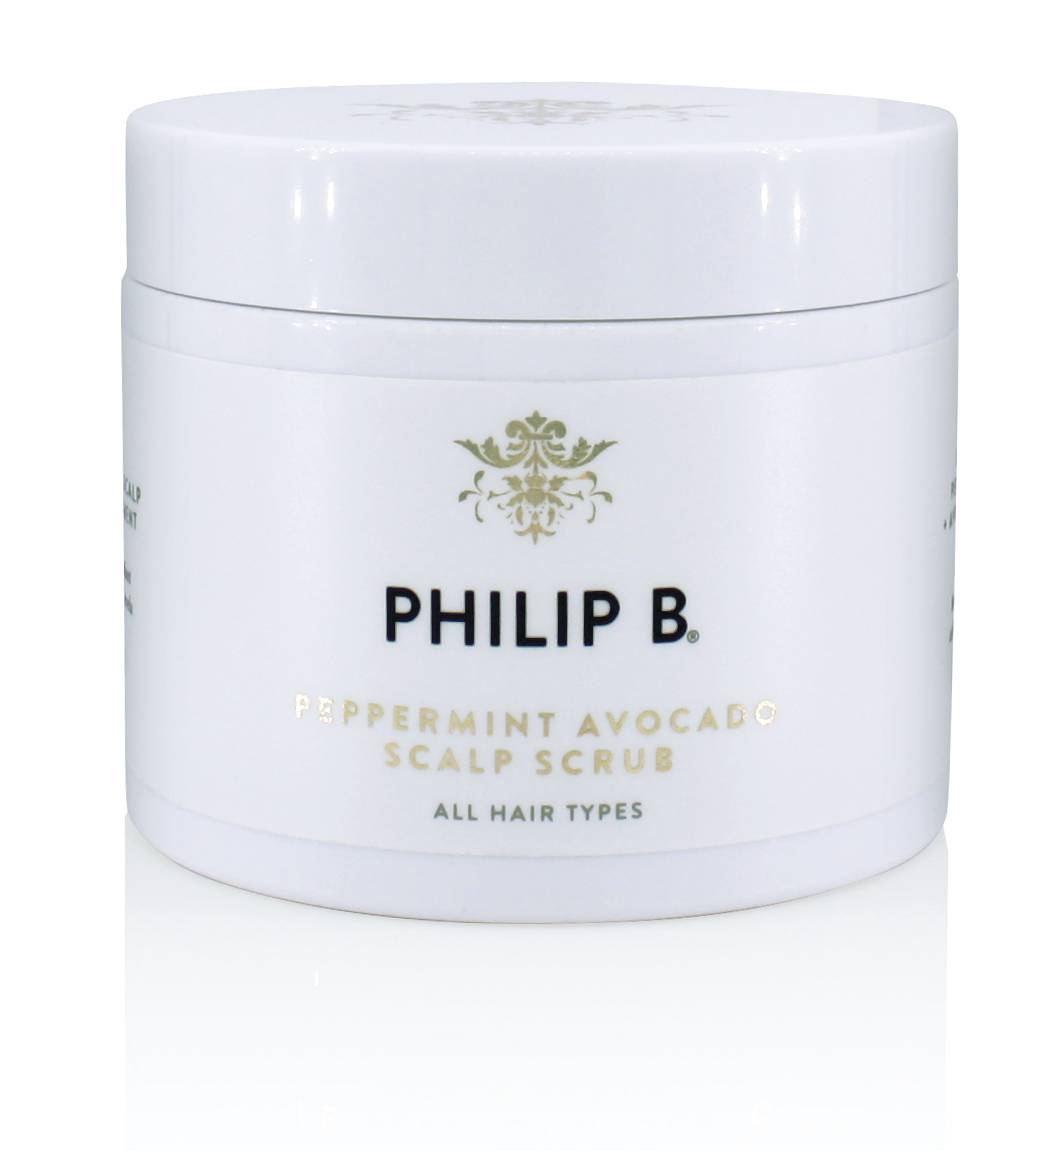 Philip B peppermint avocado scalp scrub